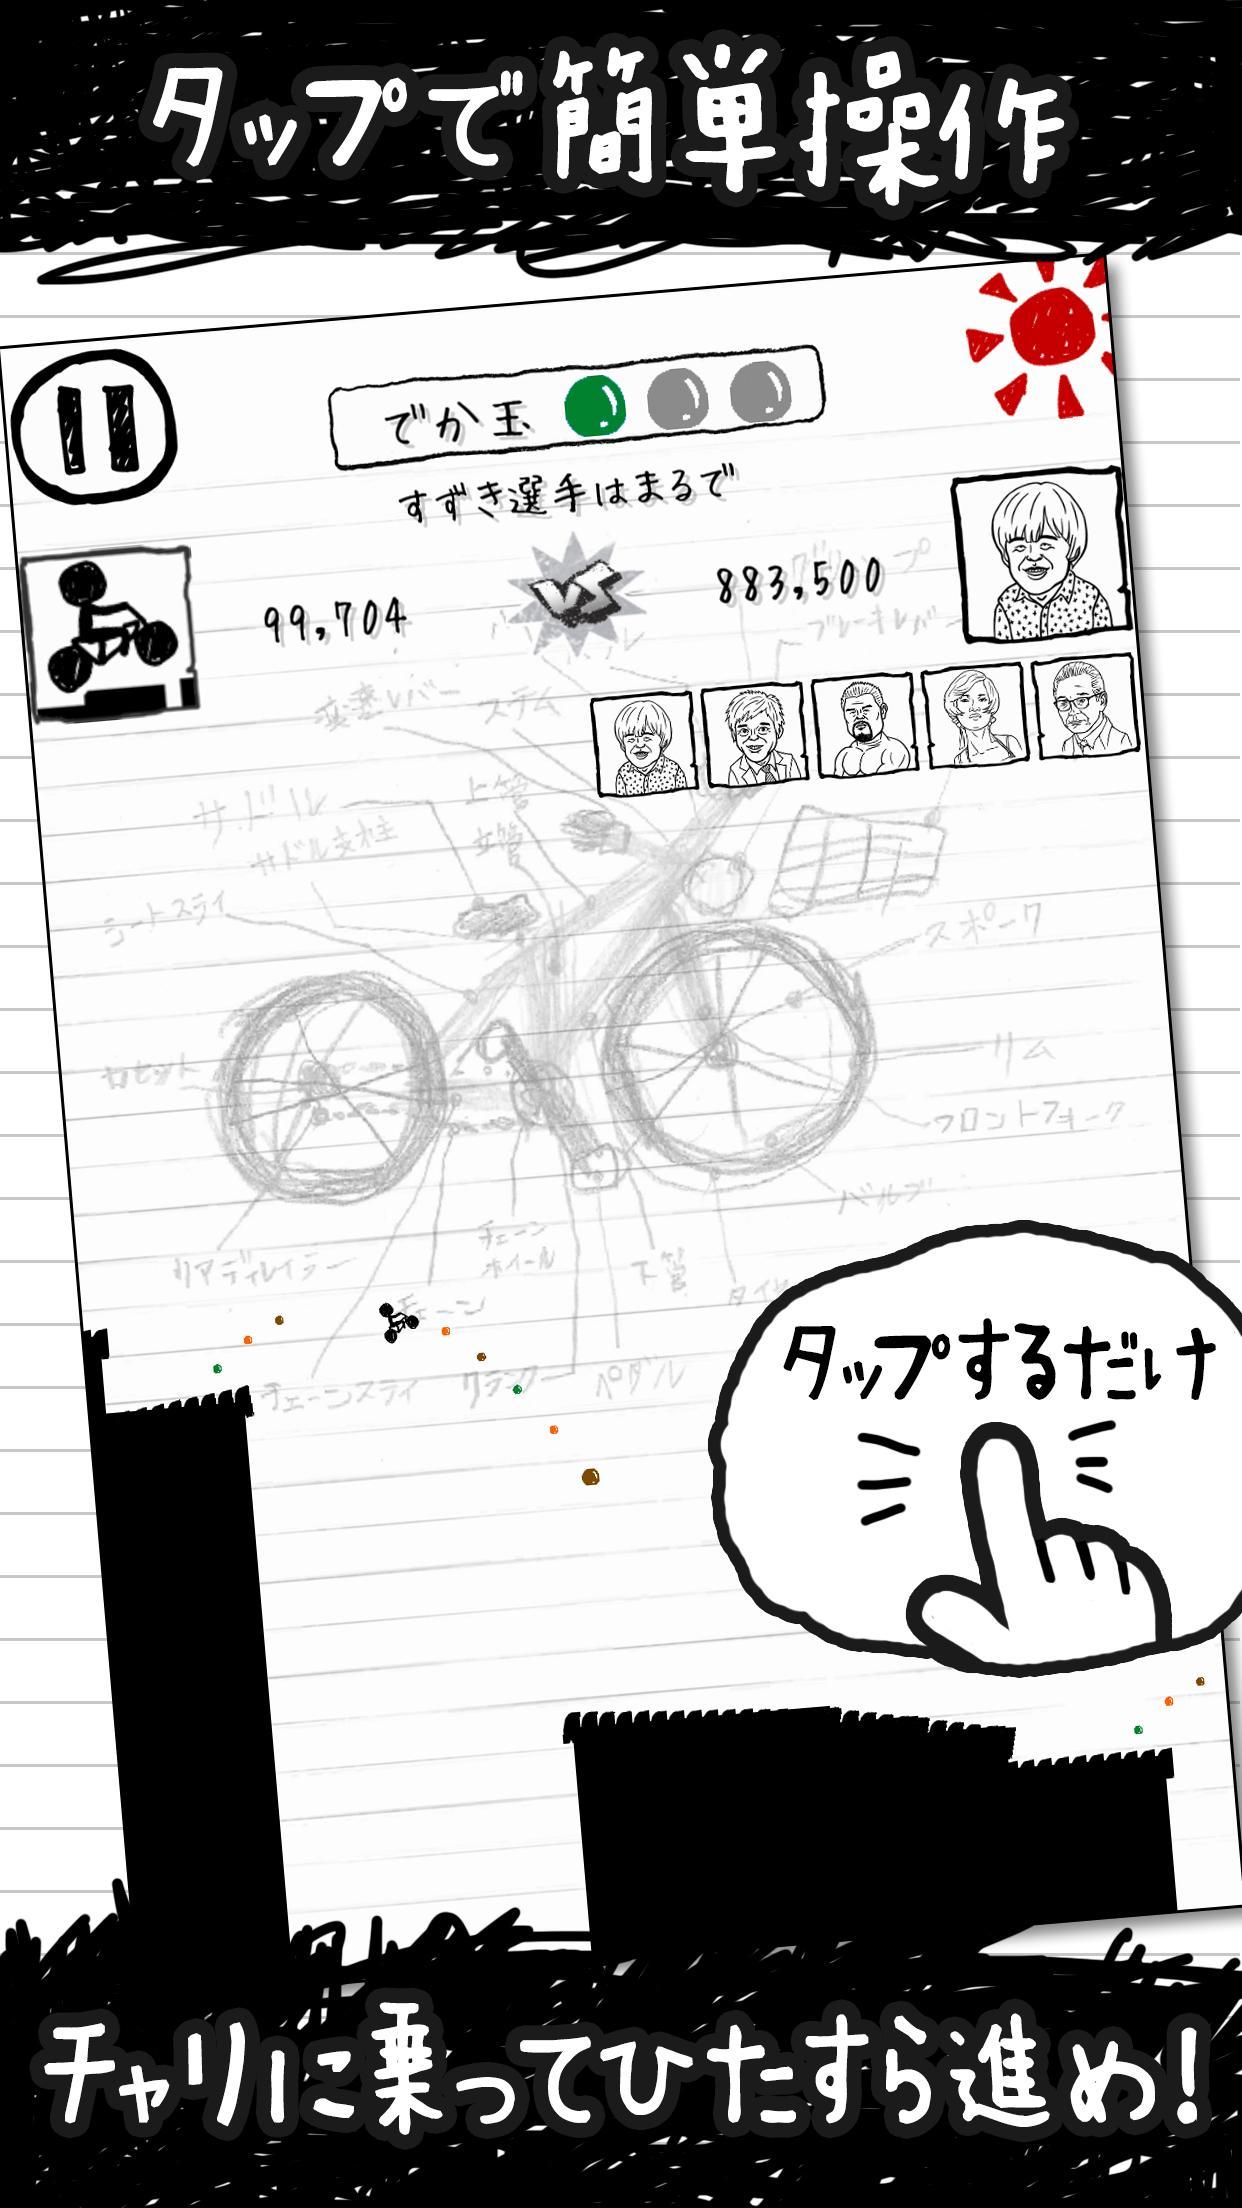 Screenshot 1 of チャリ走3rd Race -全国への挑戦- 3.9.701